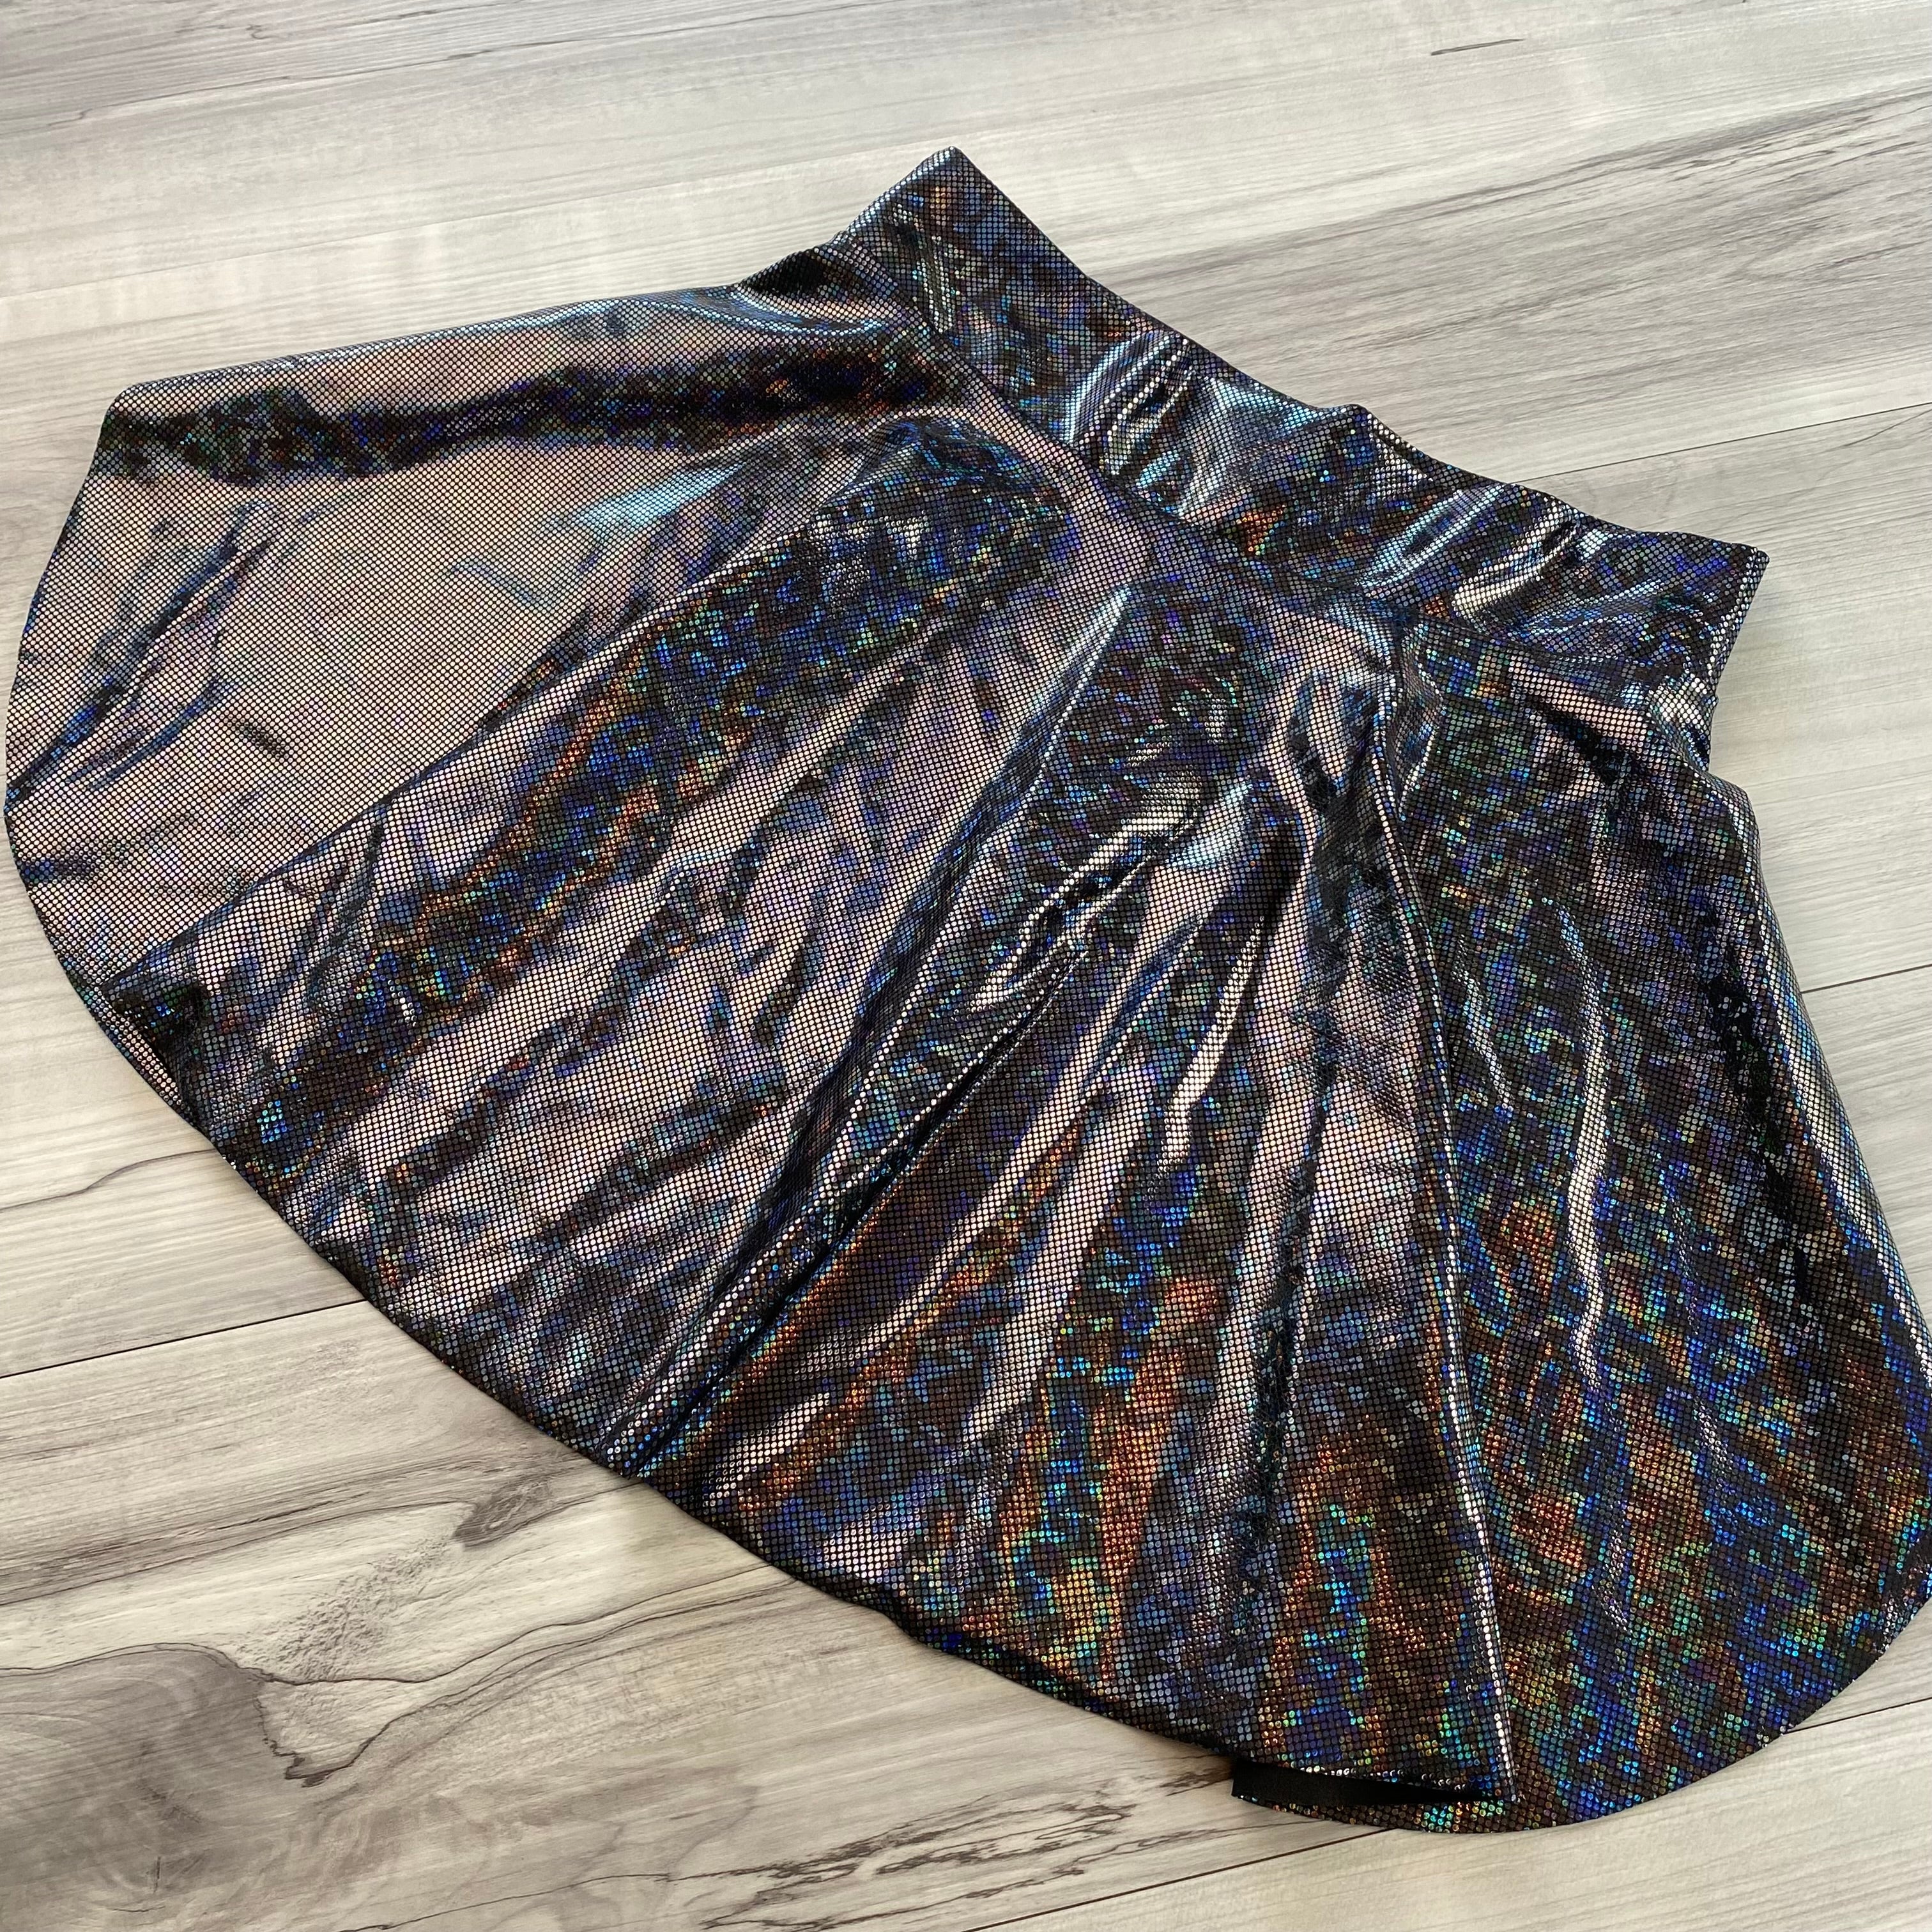 SALE - SMALL - Black Mesh Front w/Black Shattered Glass Back Skirt